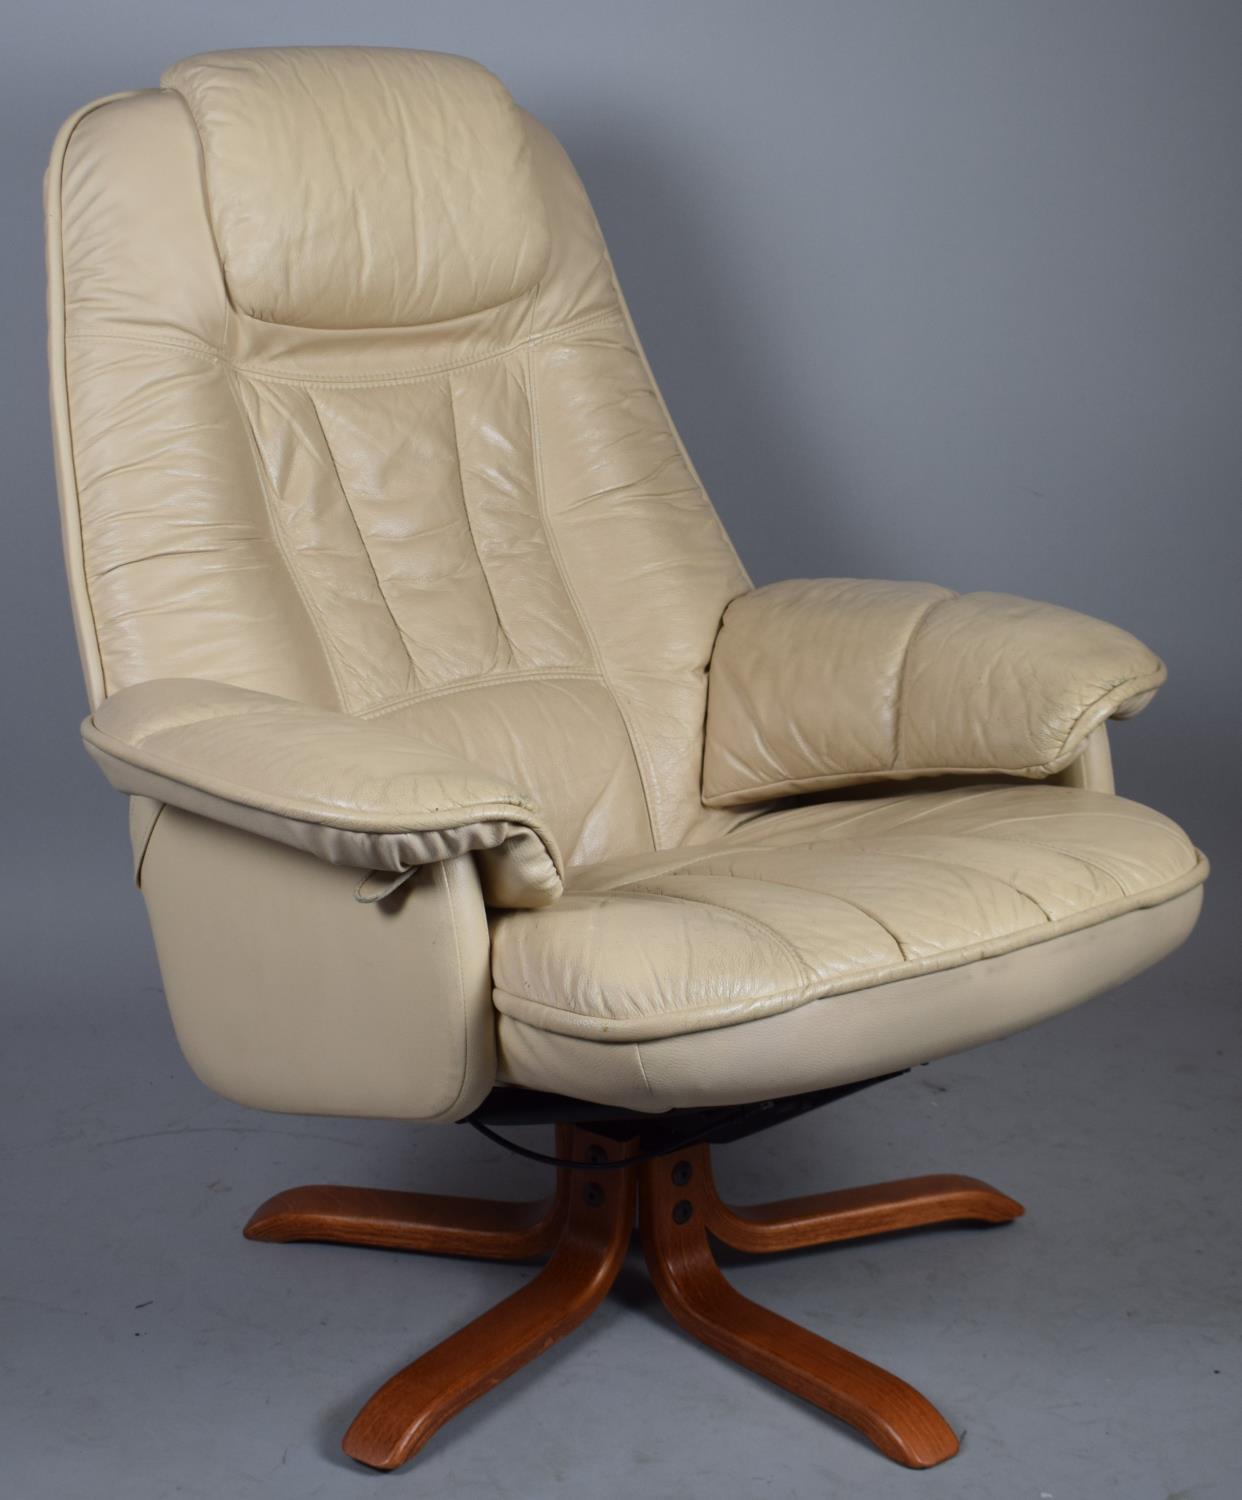 A Modern Leather Swivel Armchair